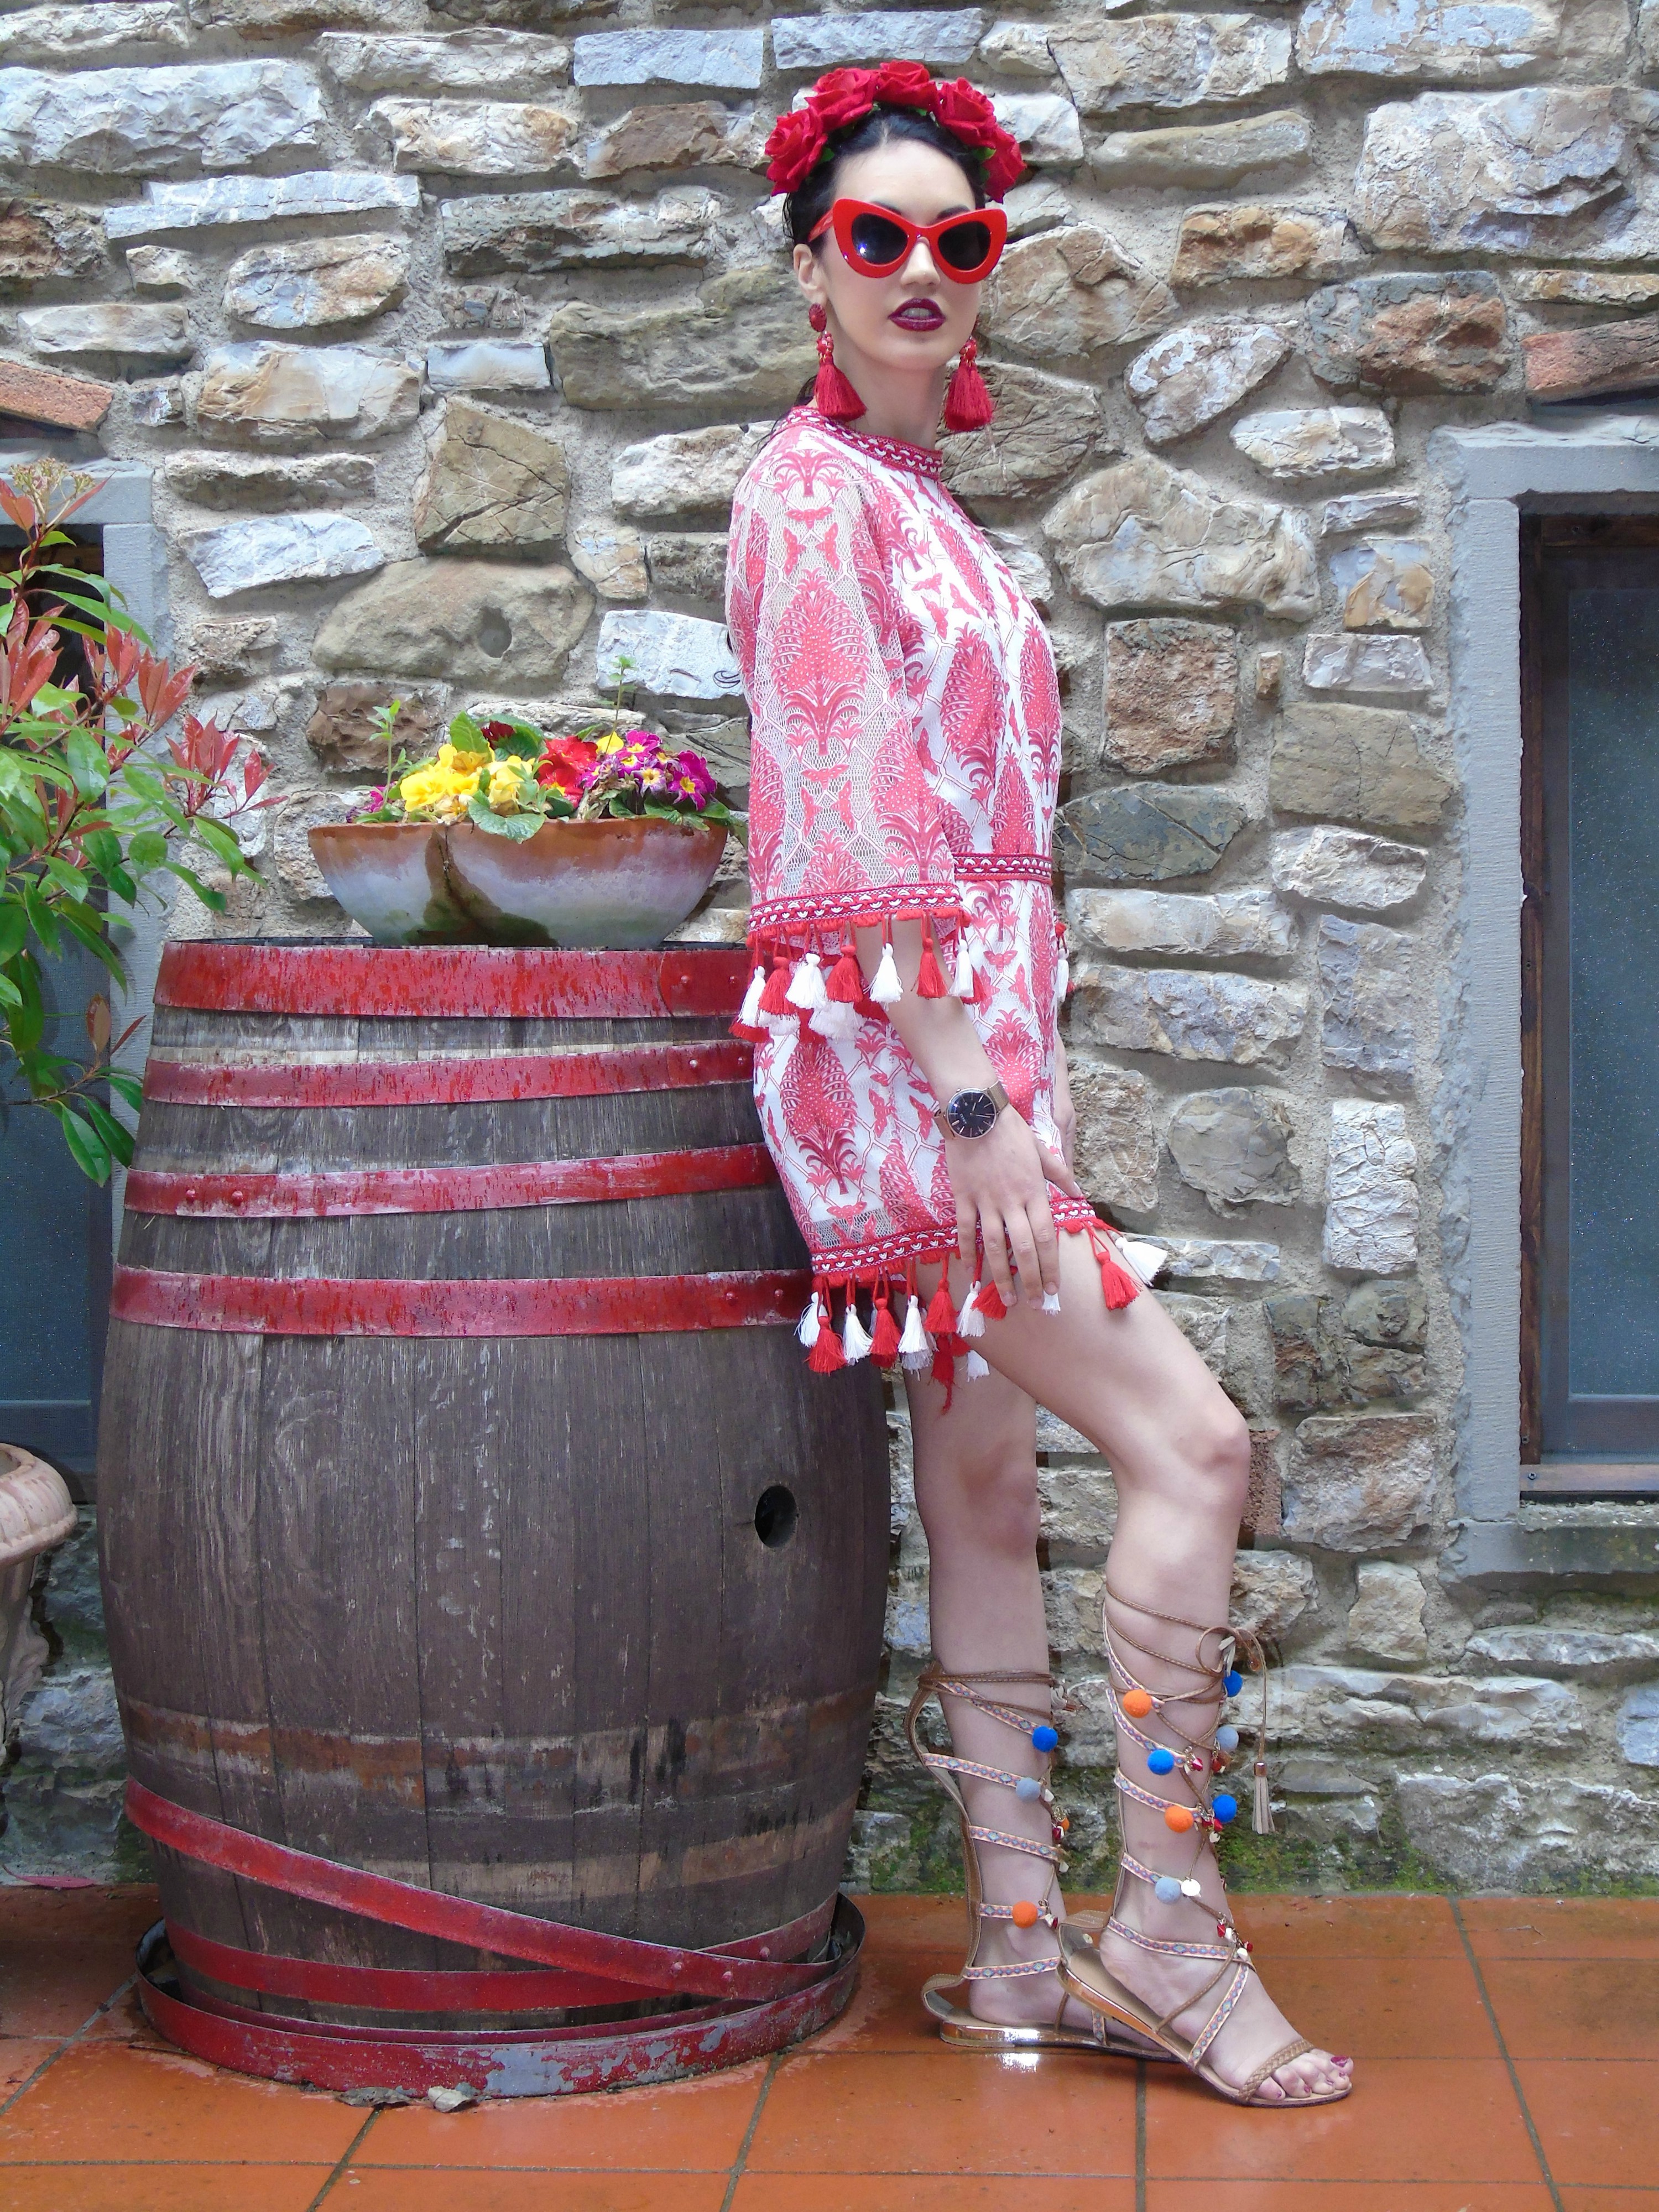 <img src="ana.jpg" alt="ana red tassel playsuit holiday in tuscany"/>